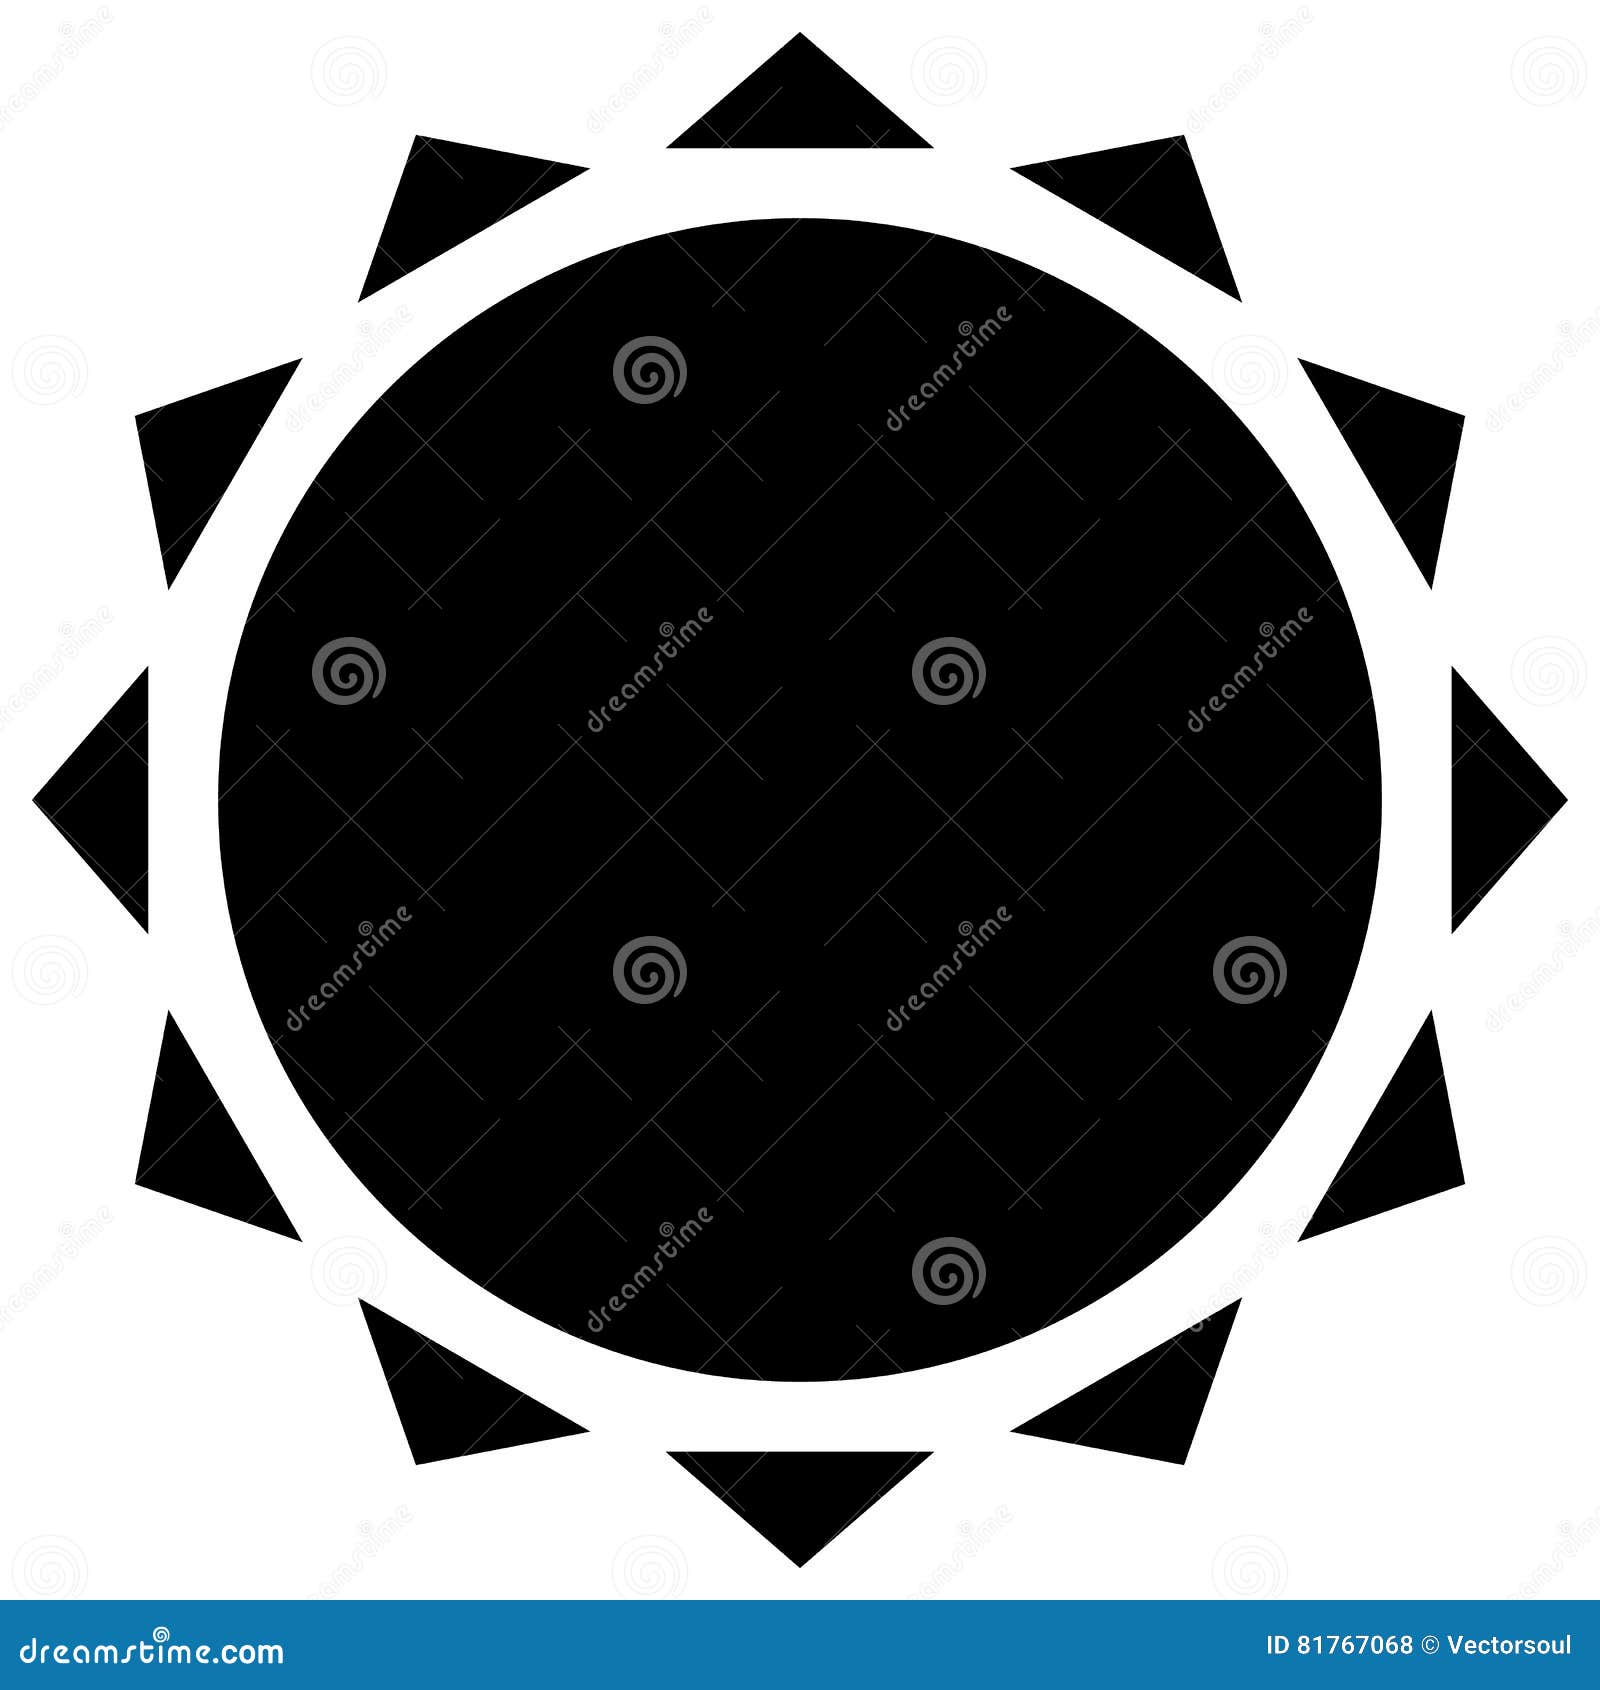 Sun With Corona Icon. Simple Geometric Clip Art. Stock Vector